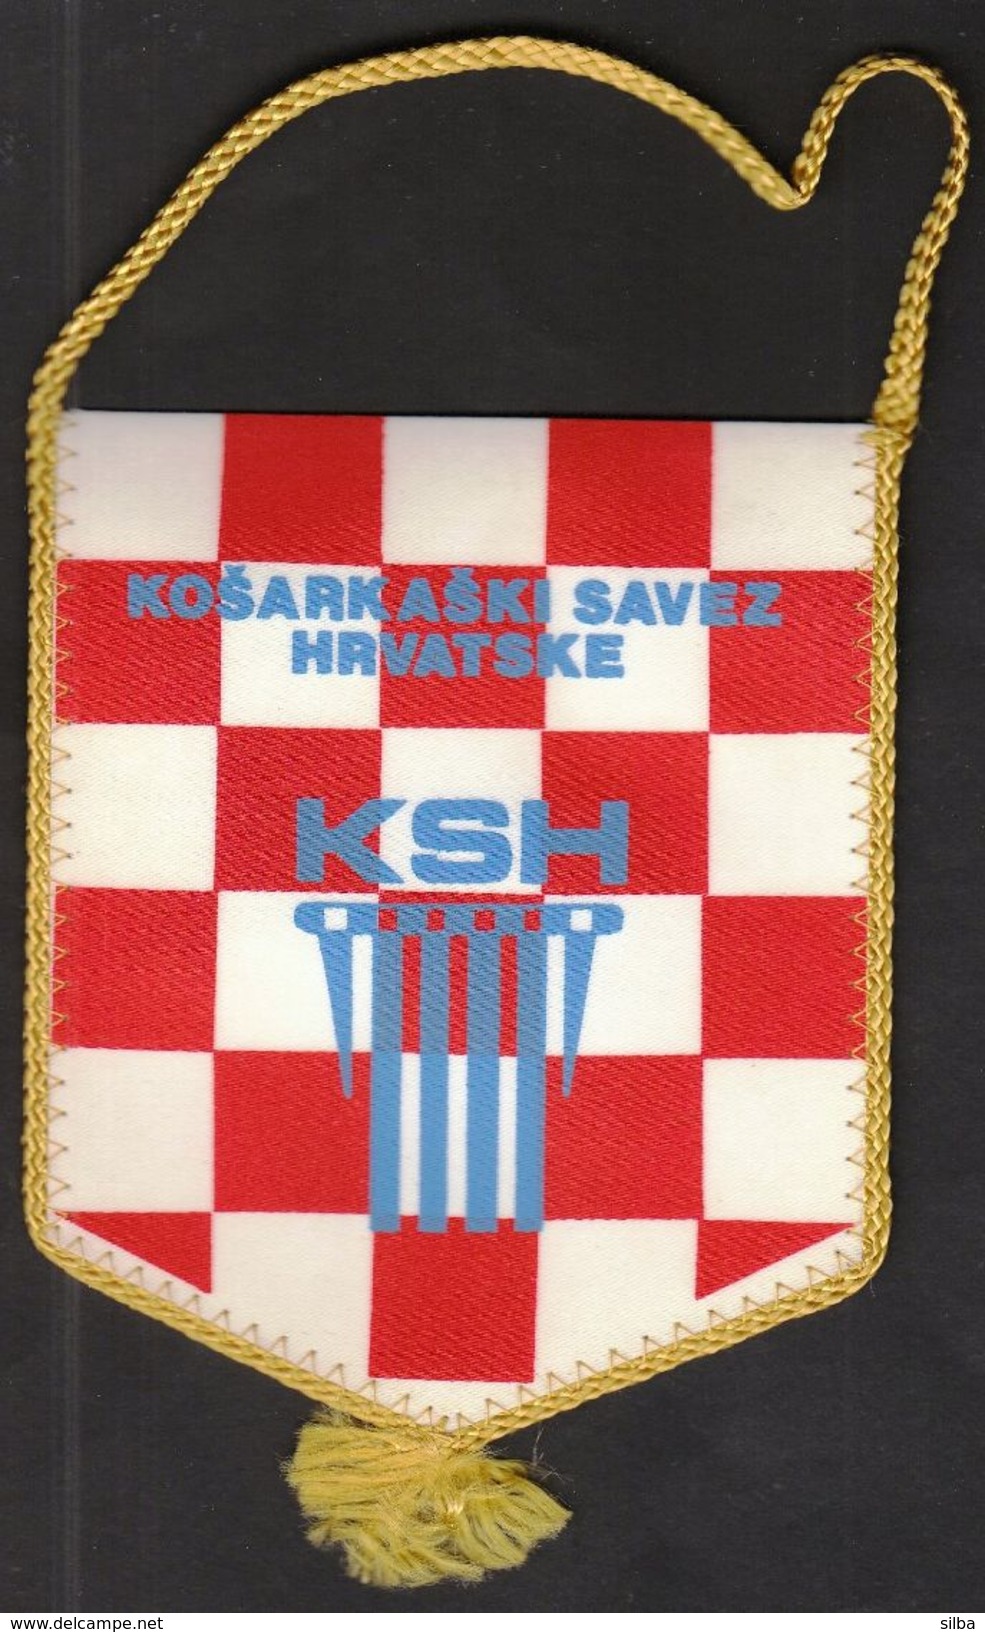 Basketball / Flag, Pennant / Croatia / Croatian Basketball Federation / KSH - Uniformes, Recordatorios & Misc